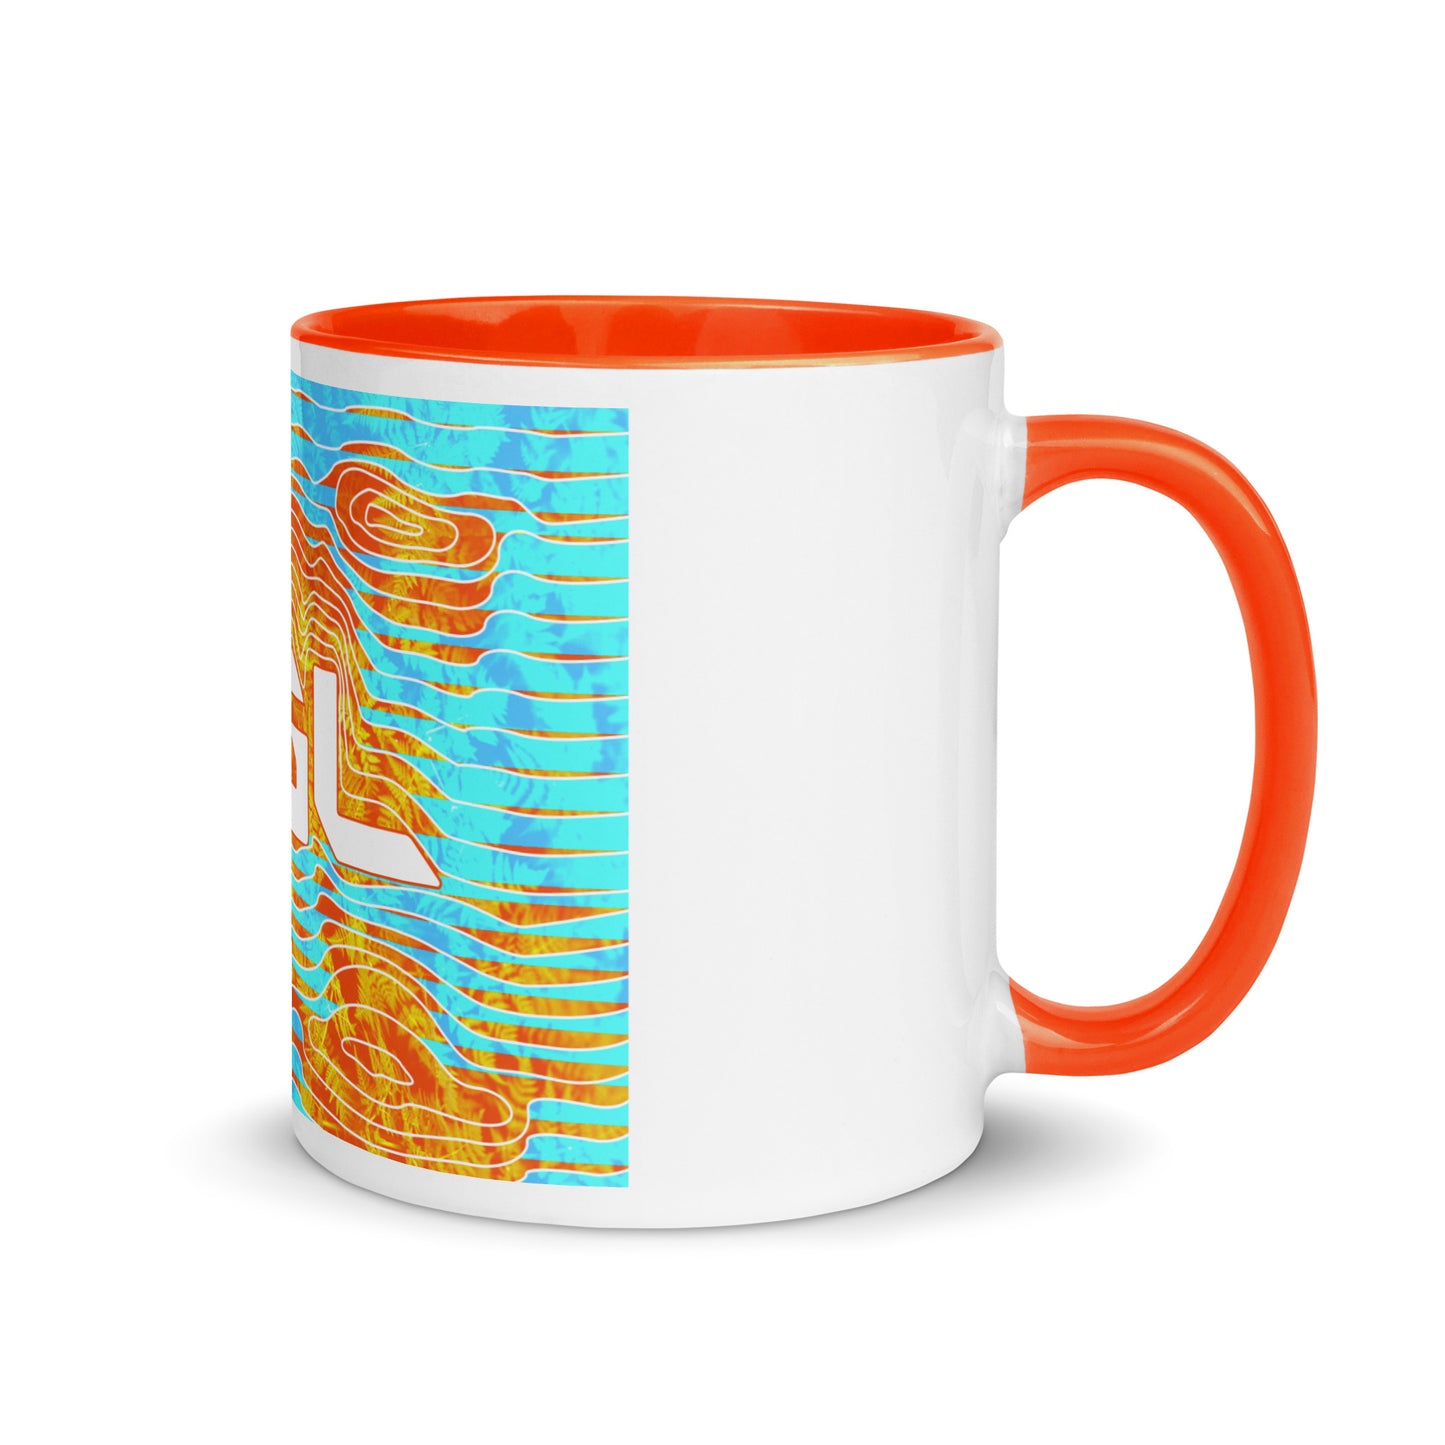 AGL Discs - Mug with Color Inside